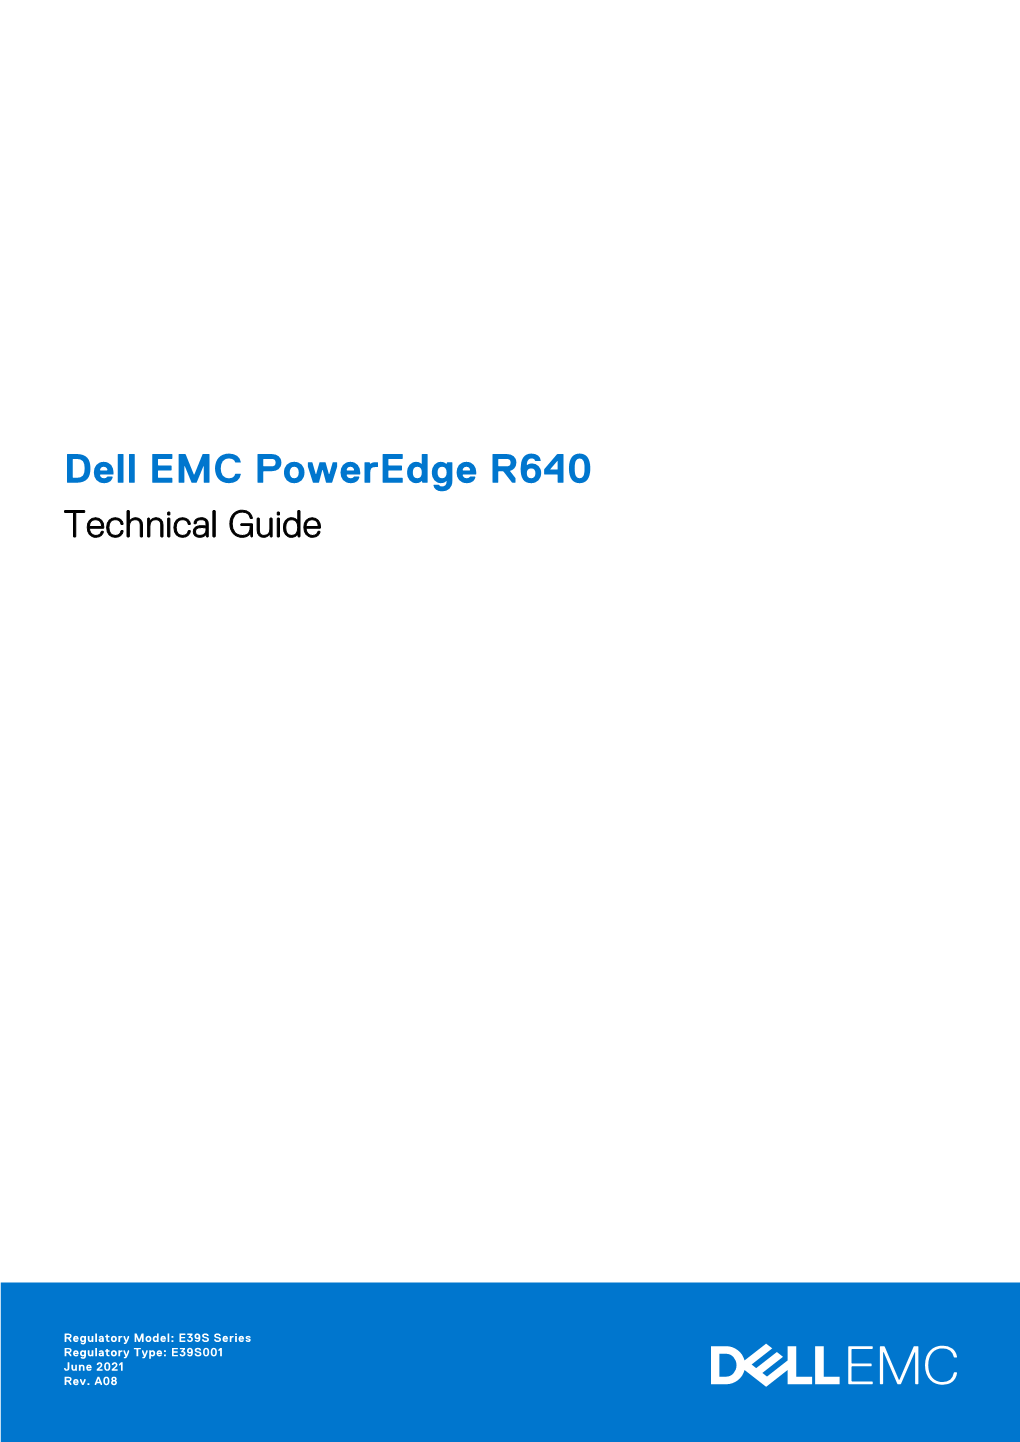 Dell EMC Poweredge R640 Technical Guide